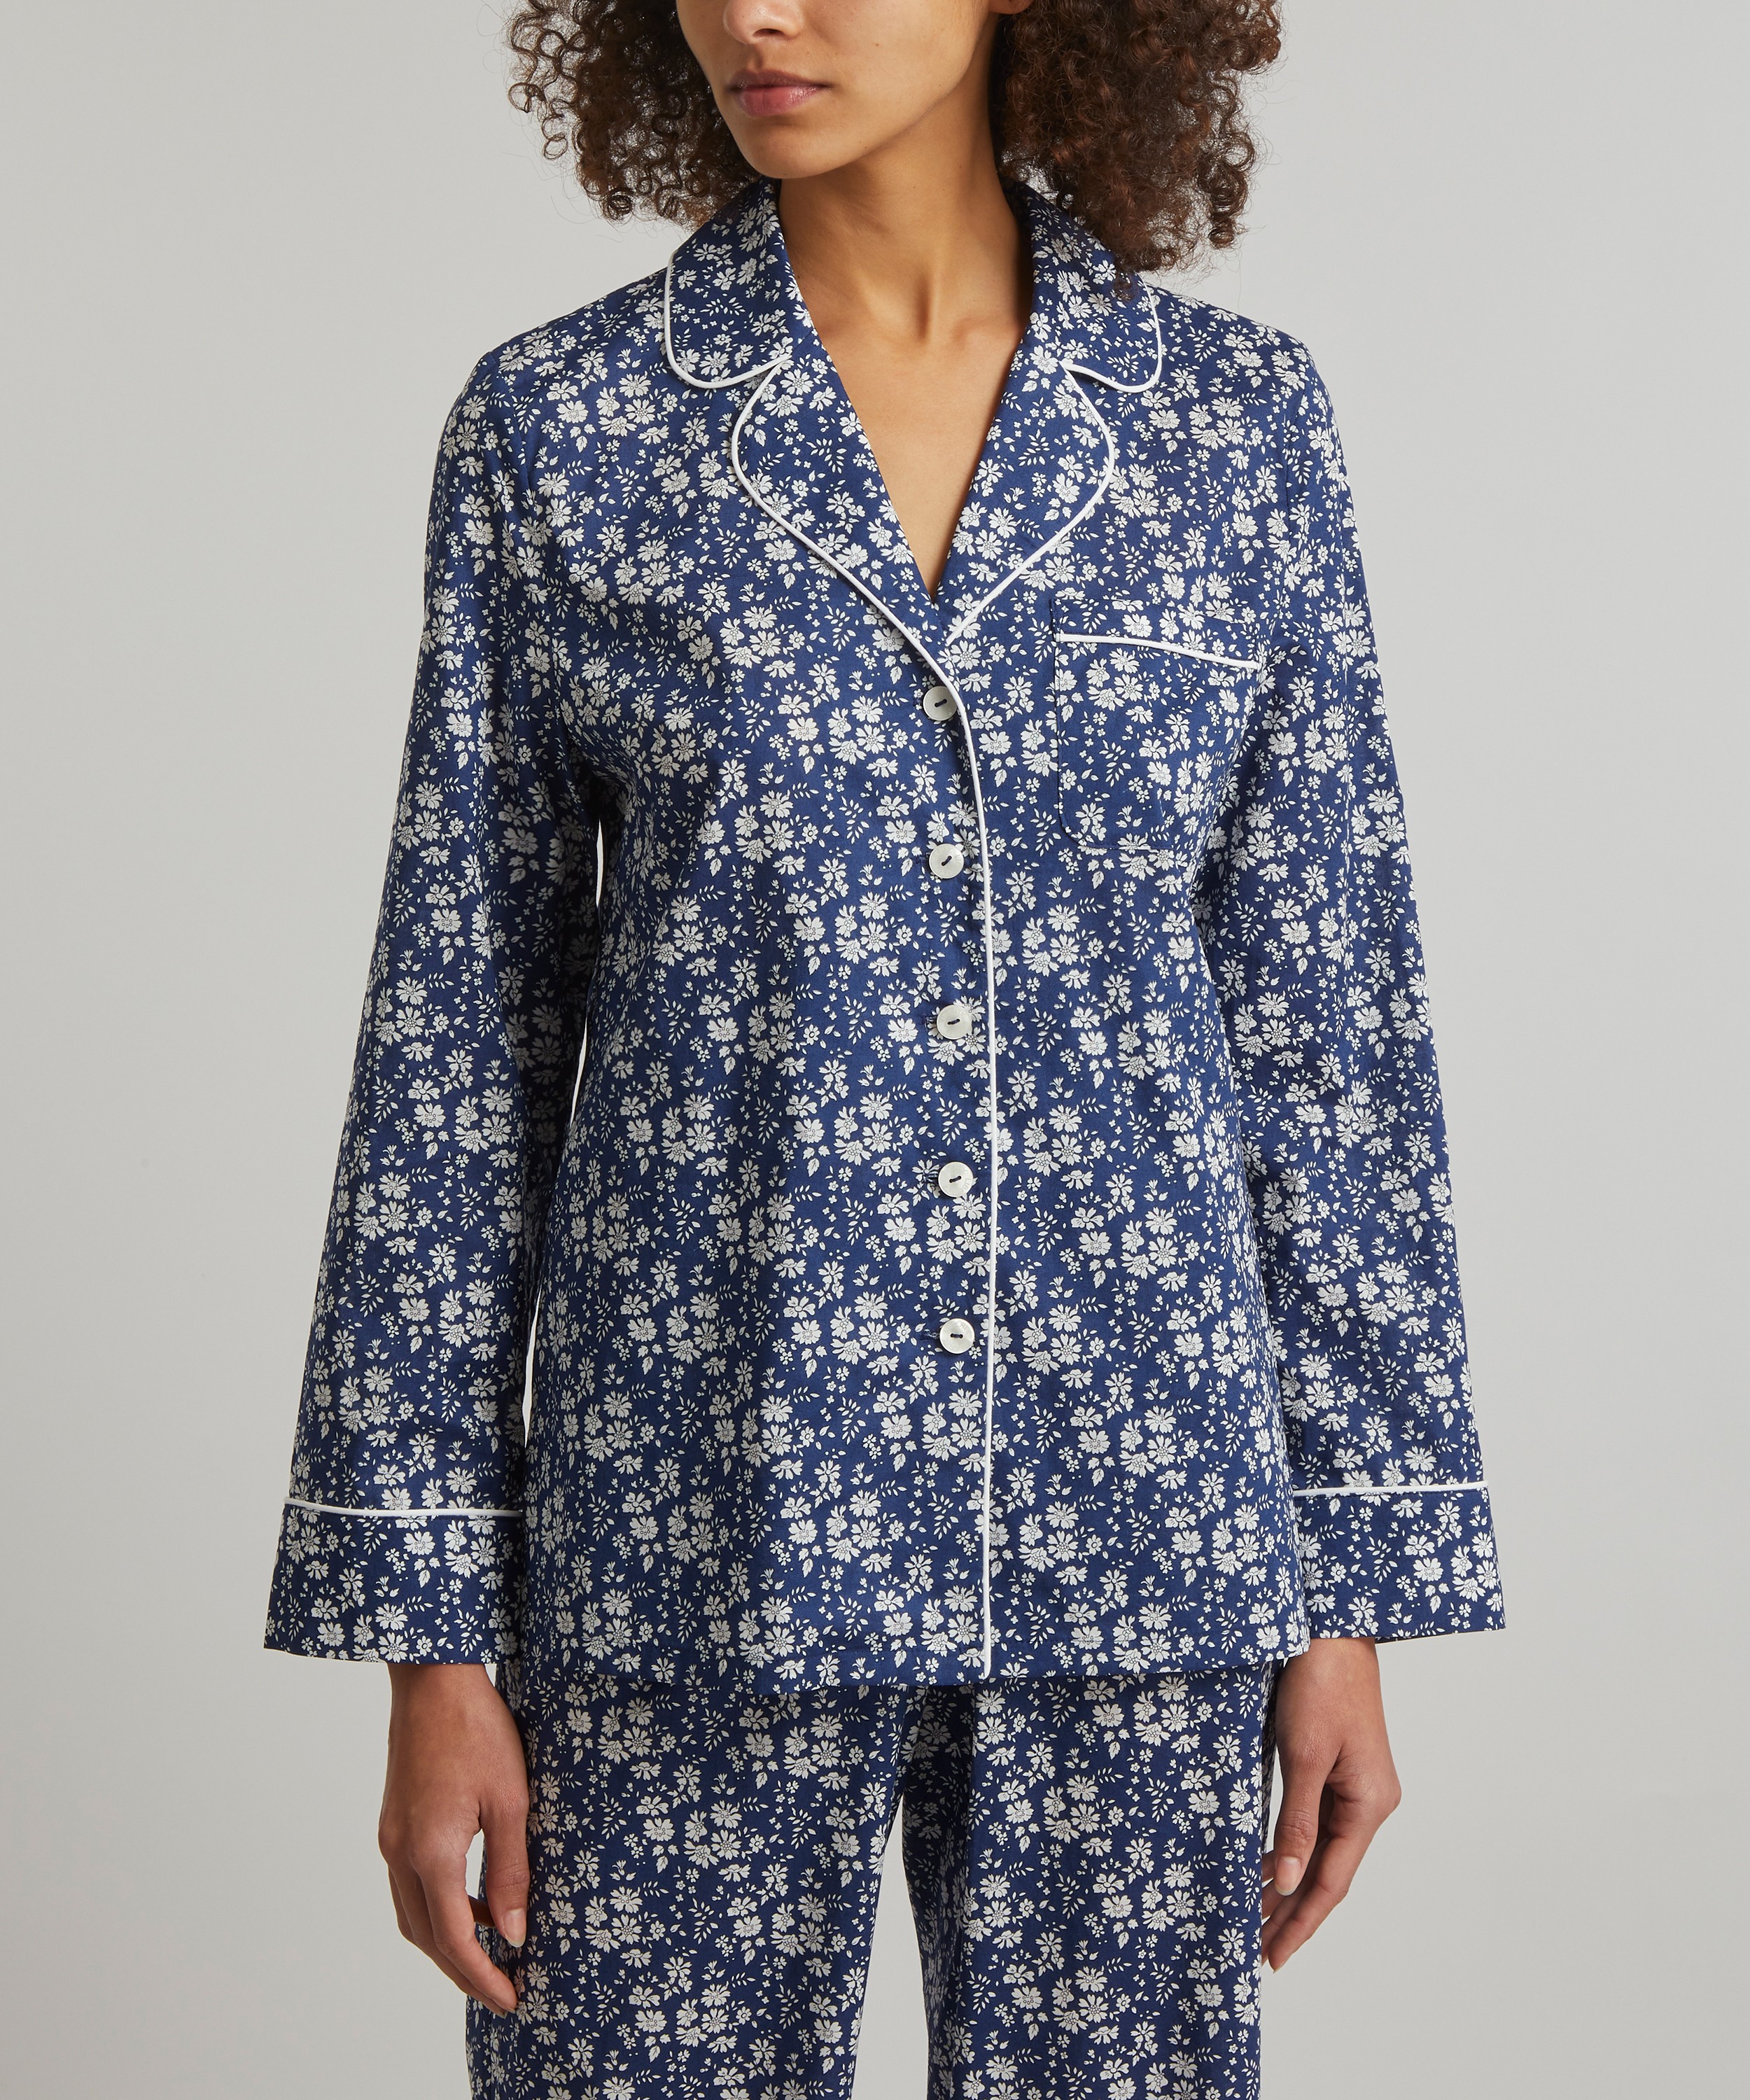 Ensemble Pyjama femme popeline de coton douce – Liberty Tana Lawn